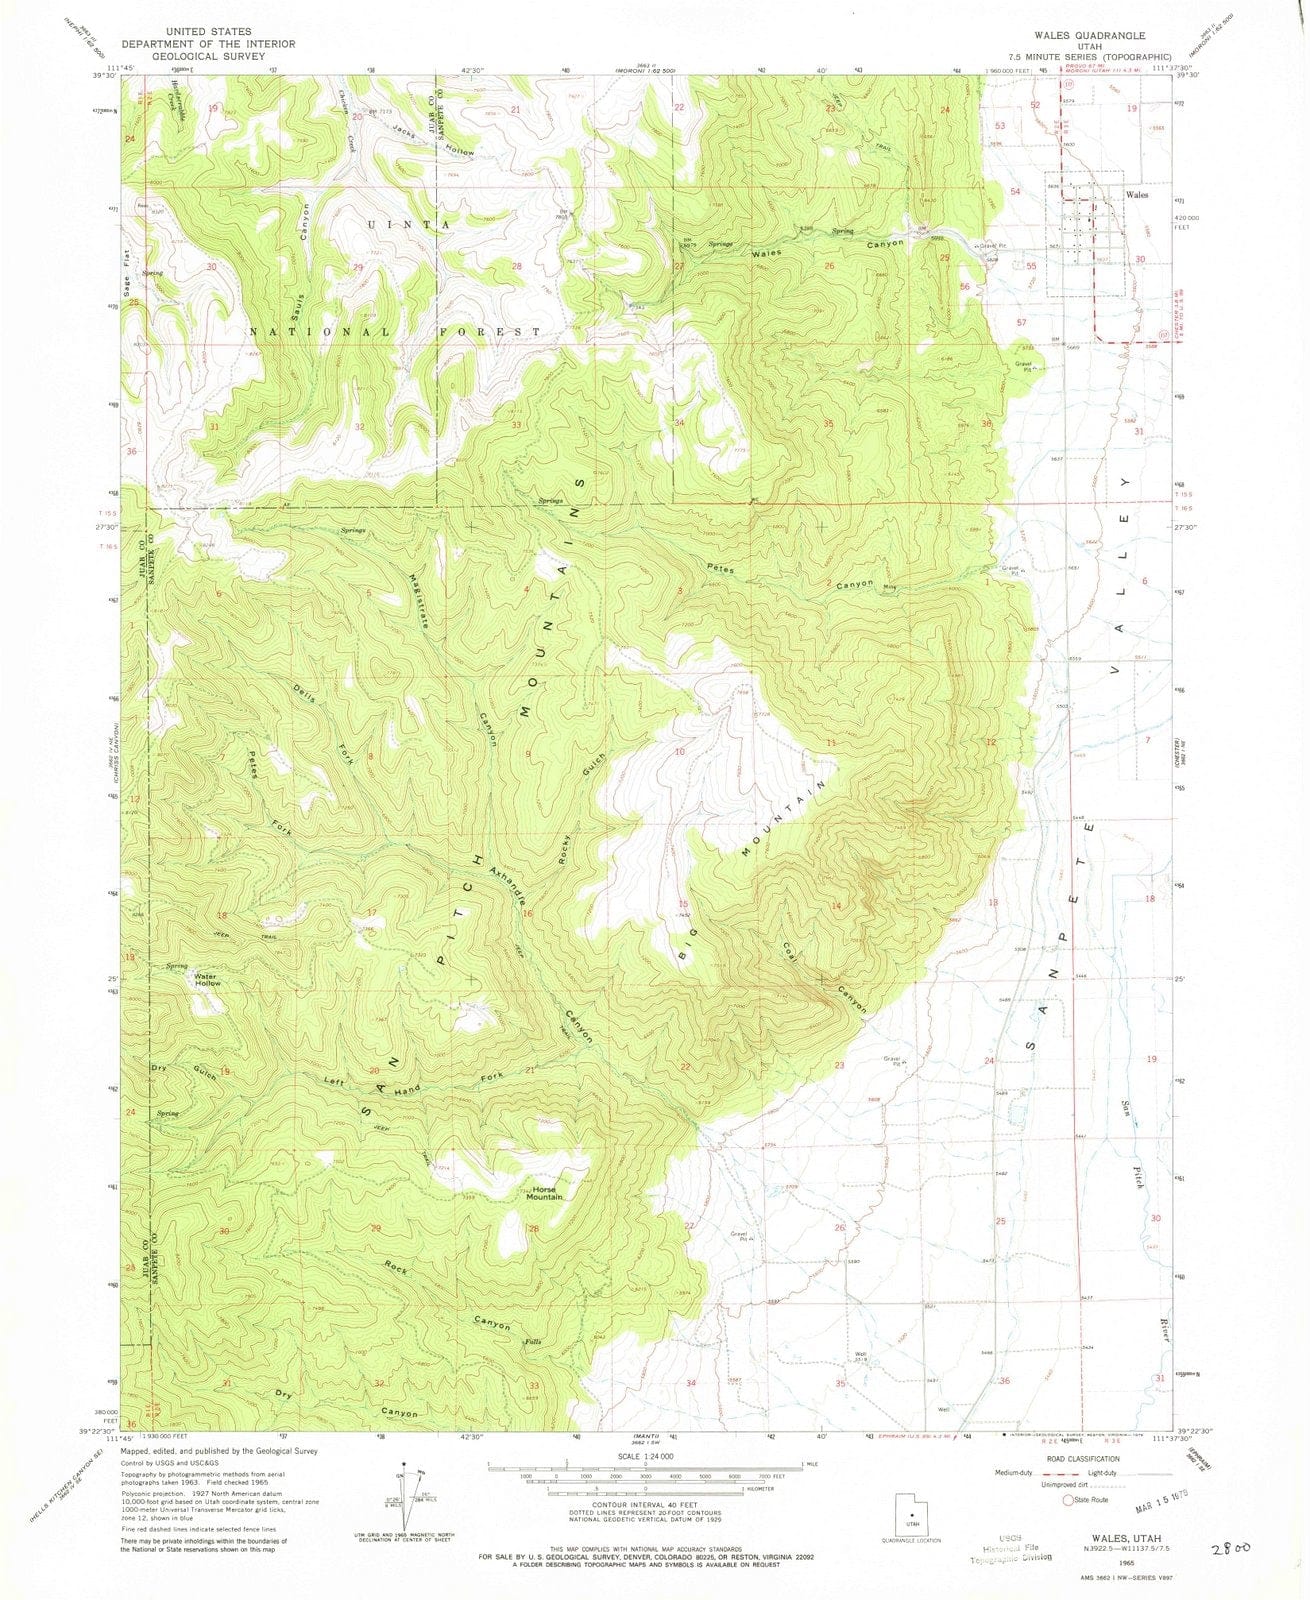 1965 Wales, UT - Utah - USGS Topographic Map